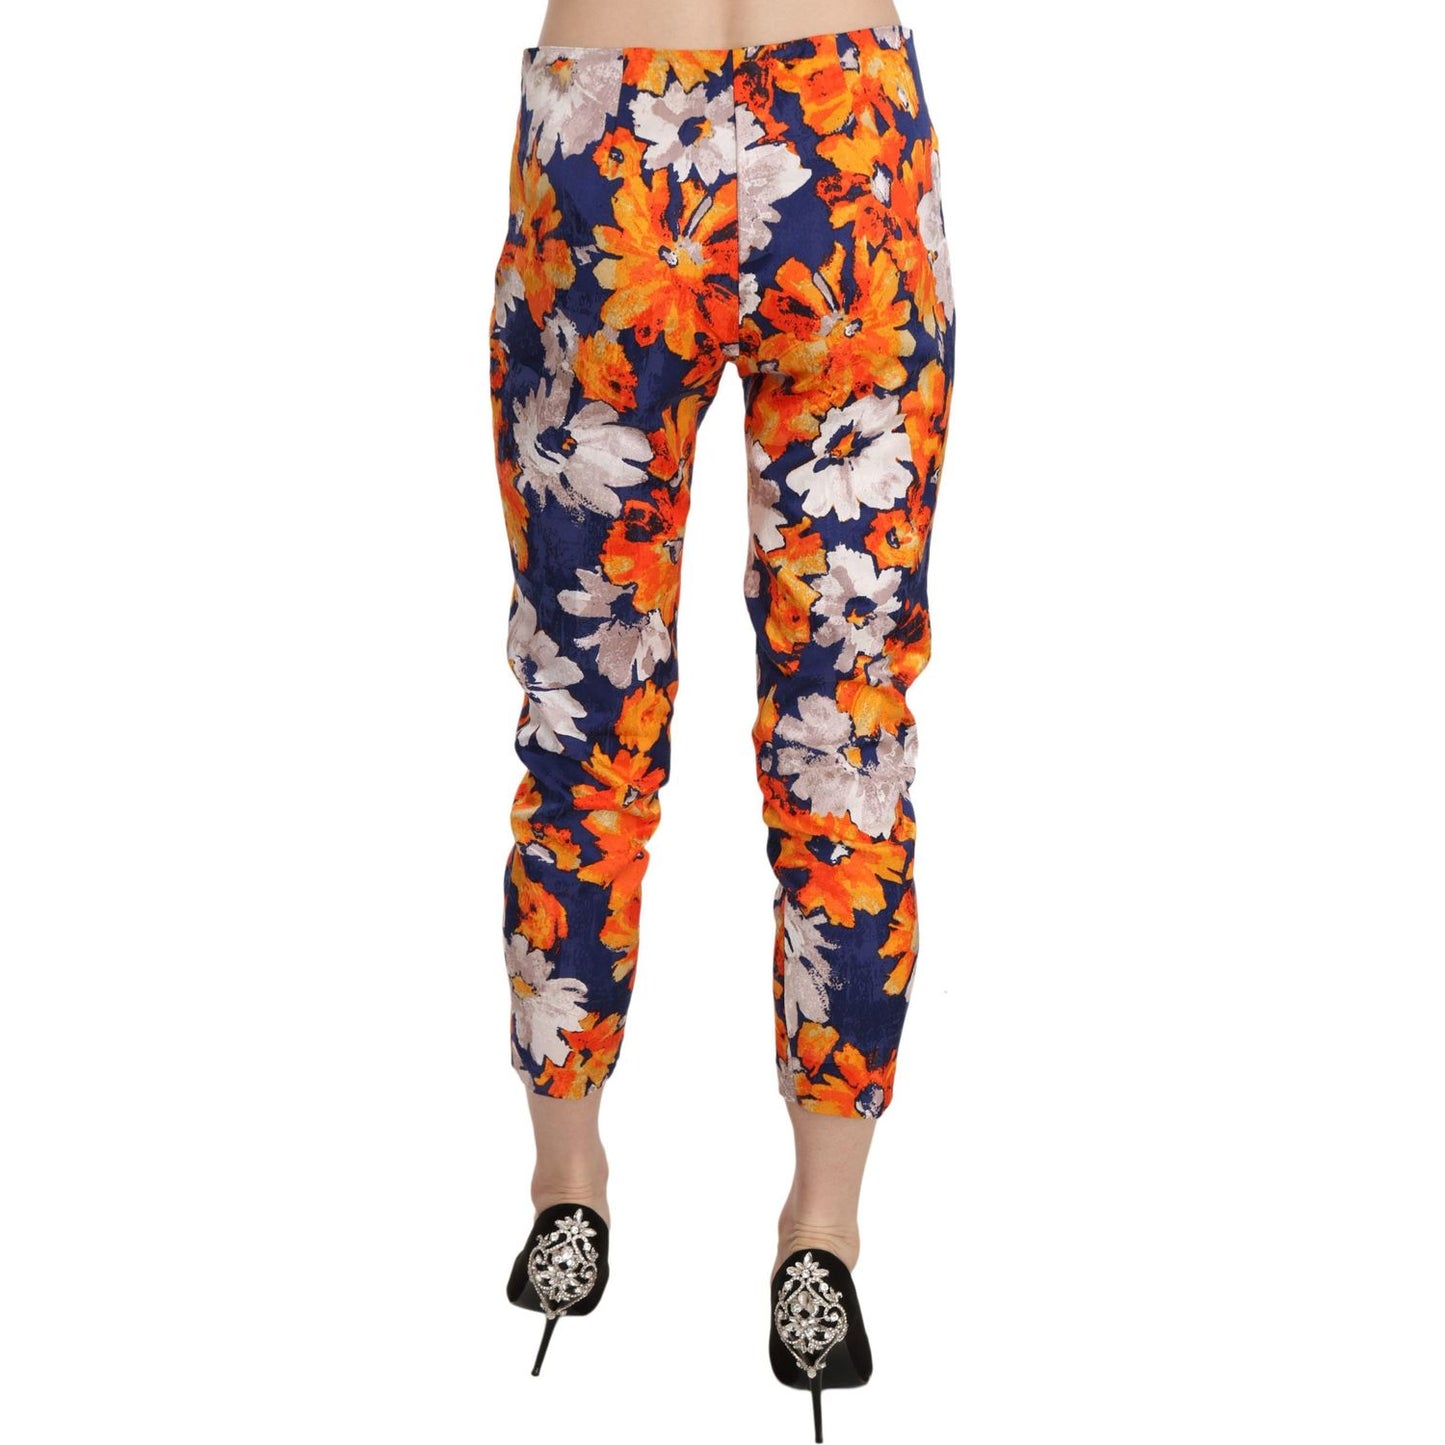 LANACAPRINA Floral Print Skinny Mid-Waist Pants blue-floral-print-skinny-slim-fit-trousers-pants